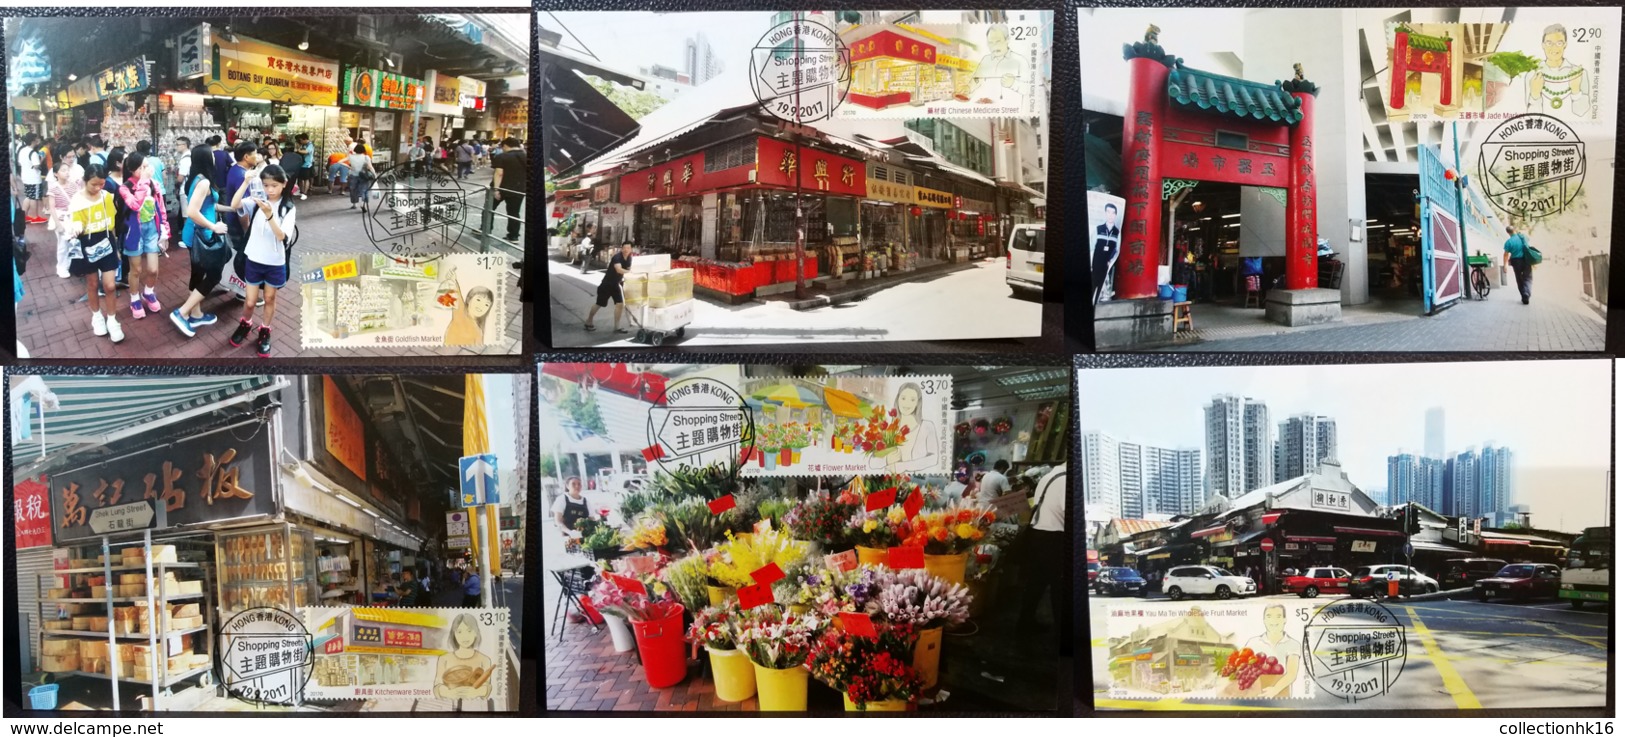 Hong Kong Shopping Streets (Fruit, Flower, Jade ...) 2017 Hong Kong Maximum Card MC Set (Pictorial Postmark) (6 Cards) - Maximum Cards